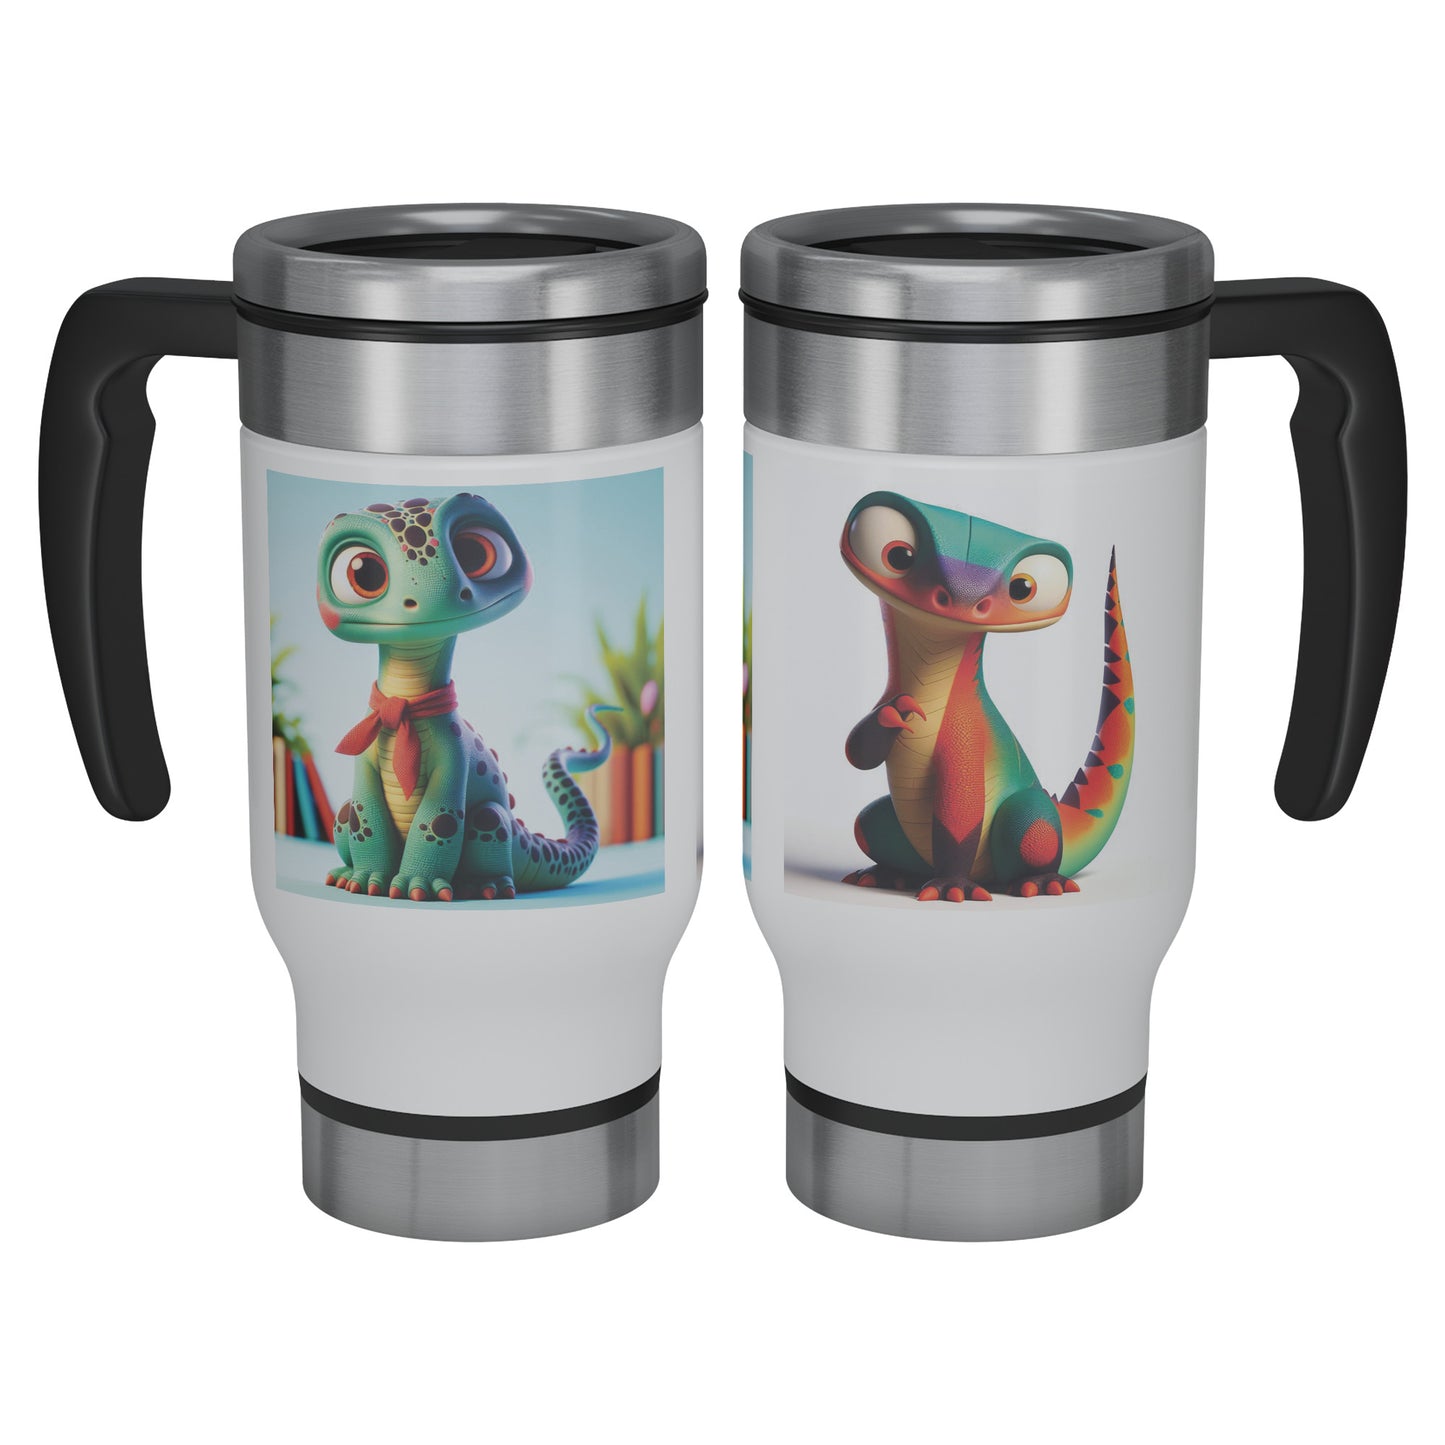 Adorable & Charming Dinosaurs - Travel Mug - Dinosaur #1